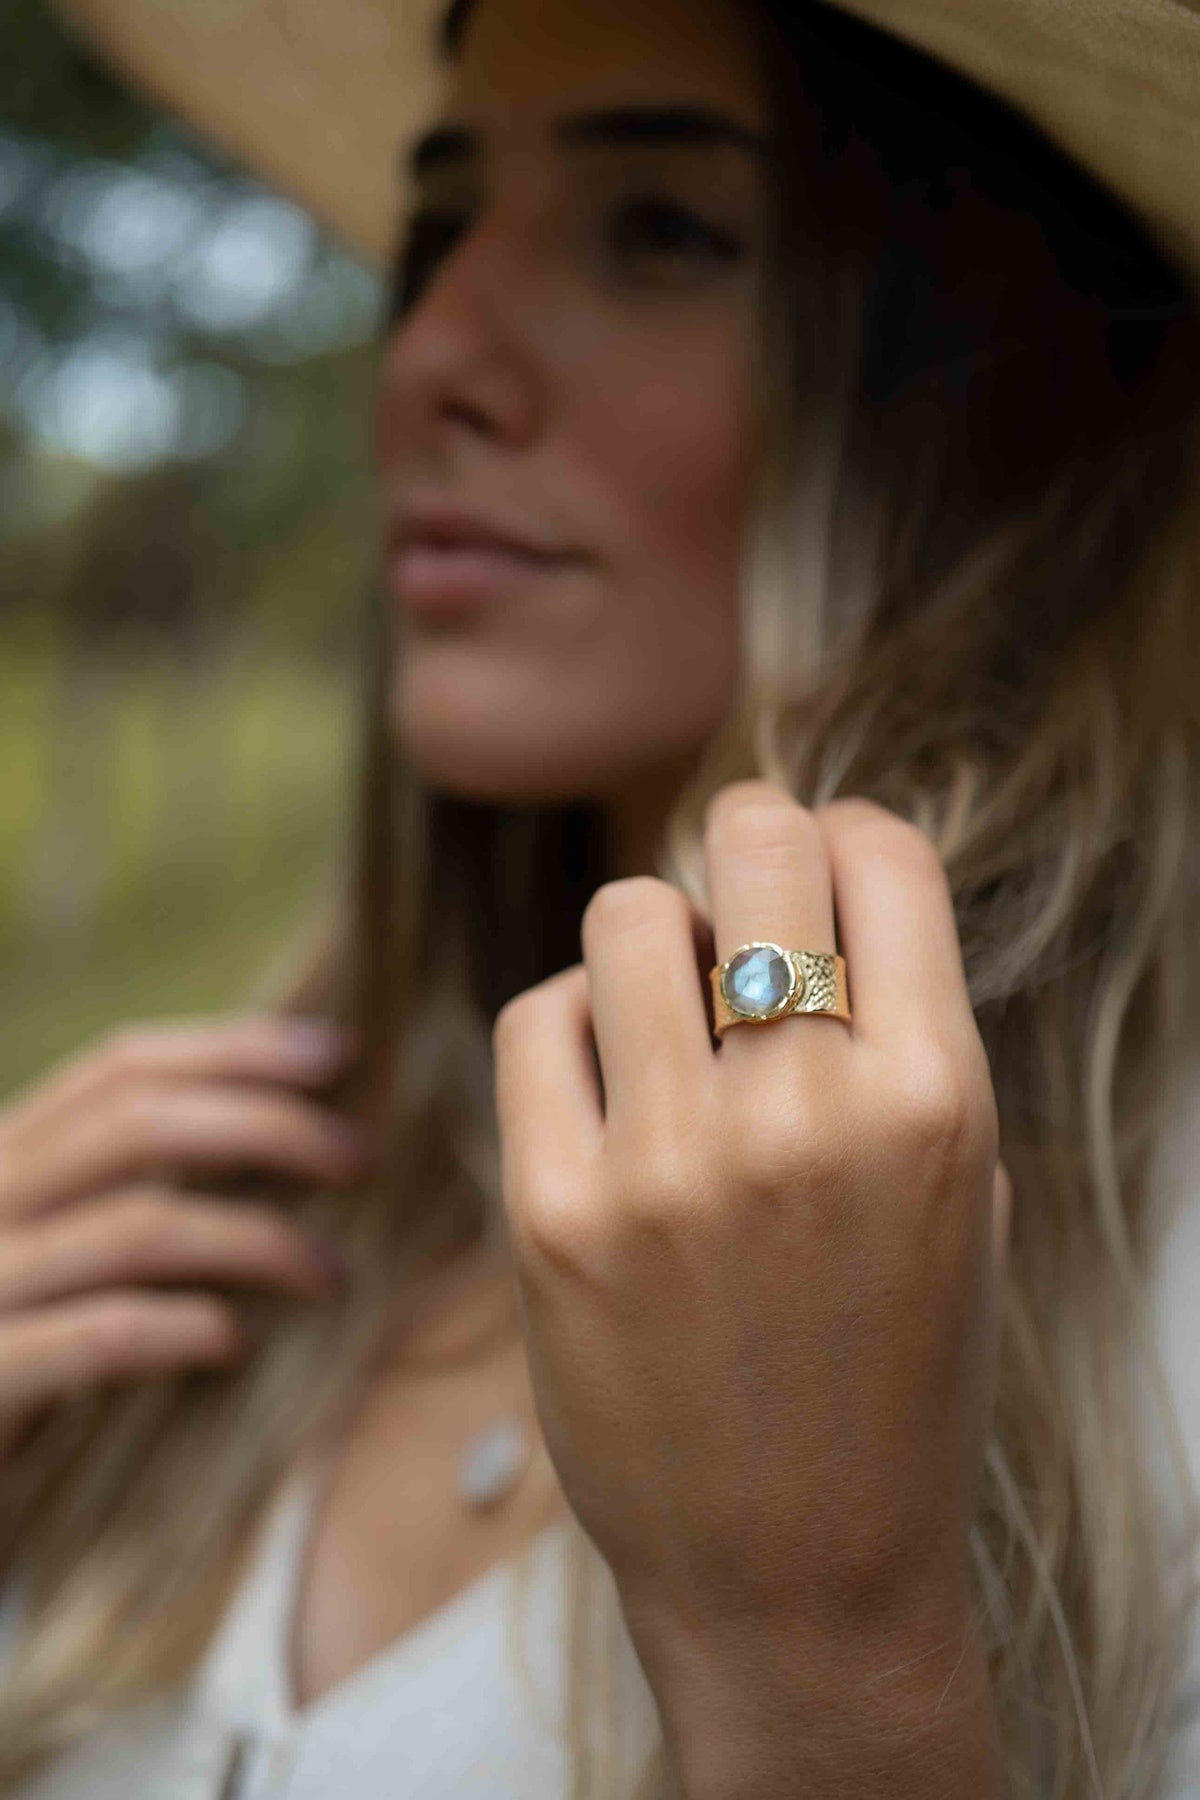 Rainbow Labradorite Ring * Gold Ring * Gemstone * Gold Plated * Statement *Bridal *Wedding * Natural  *Handmade * BJR252